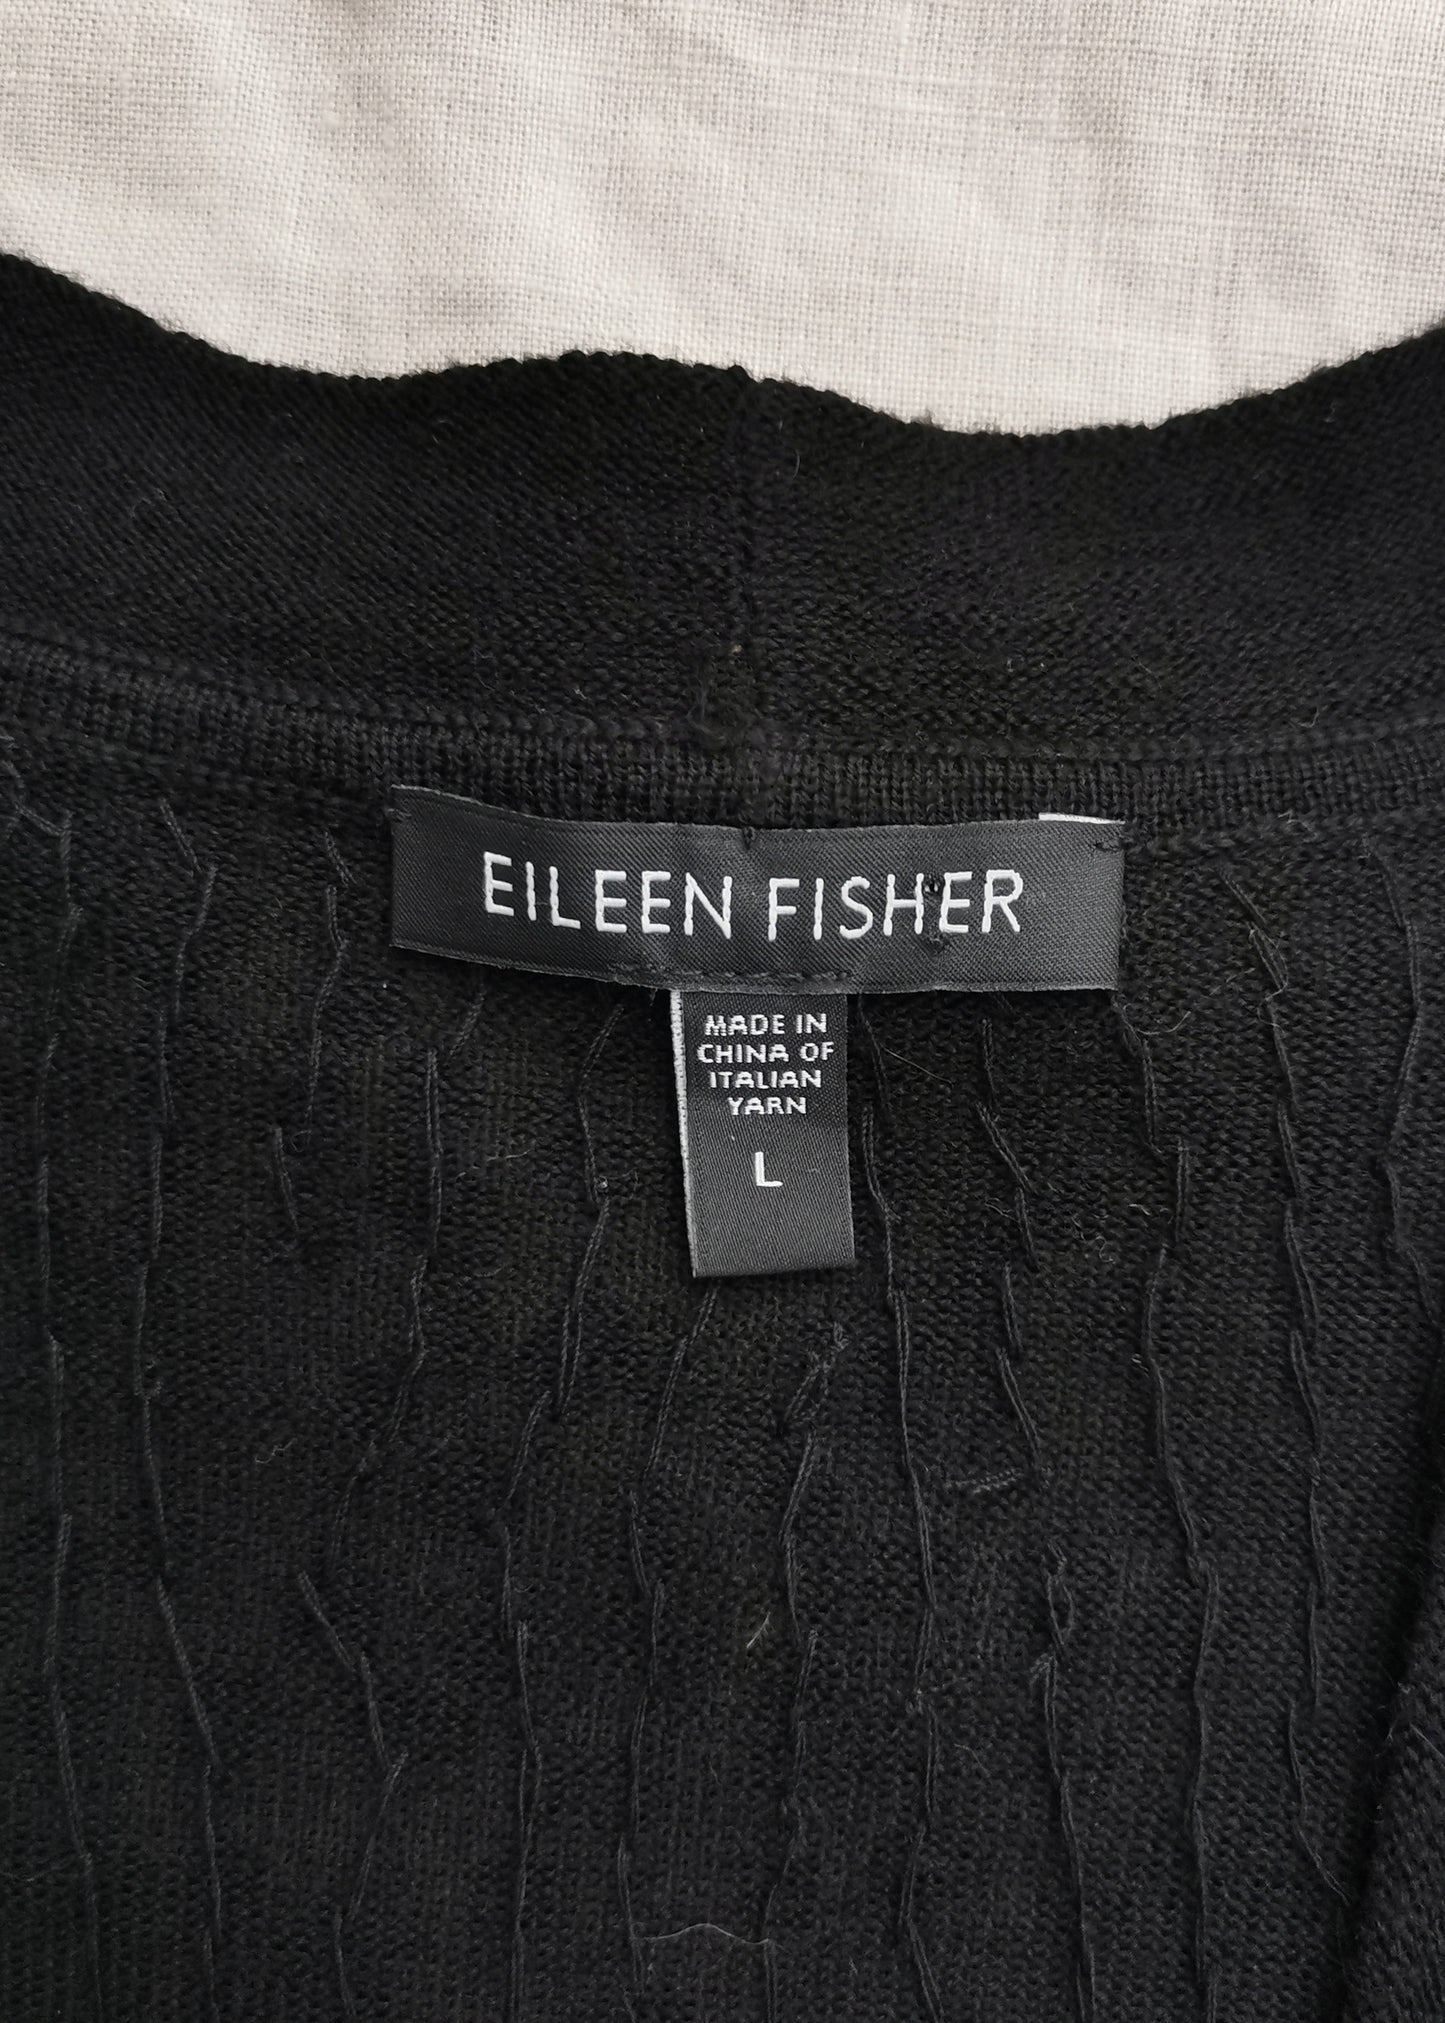 Eileen Fisher Merino Wool Cardigan (L)